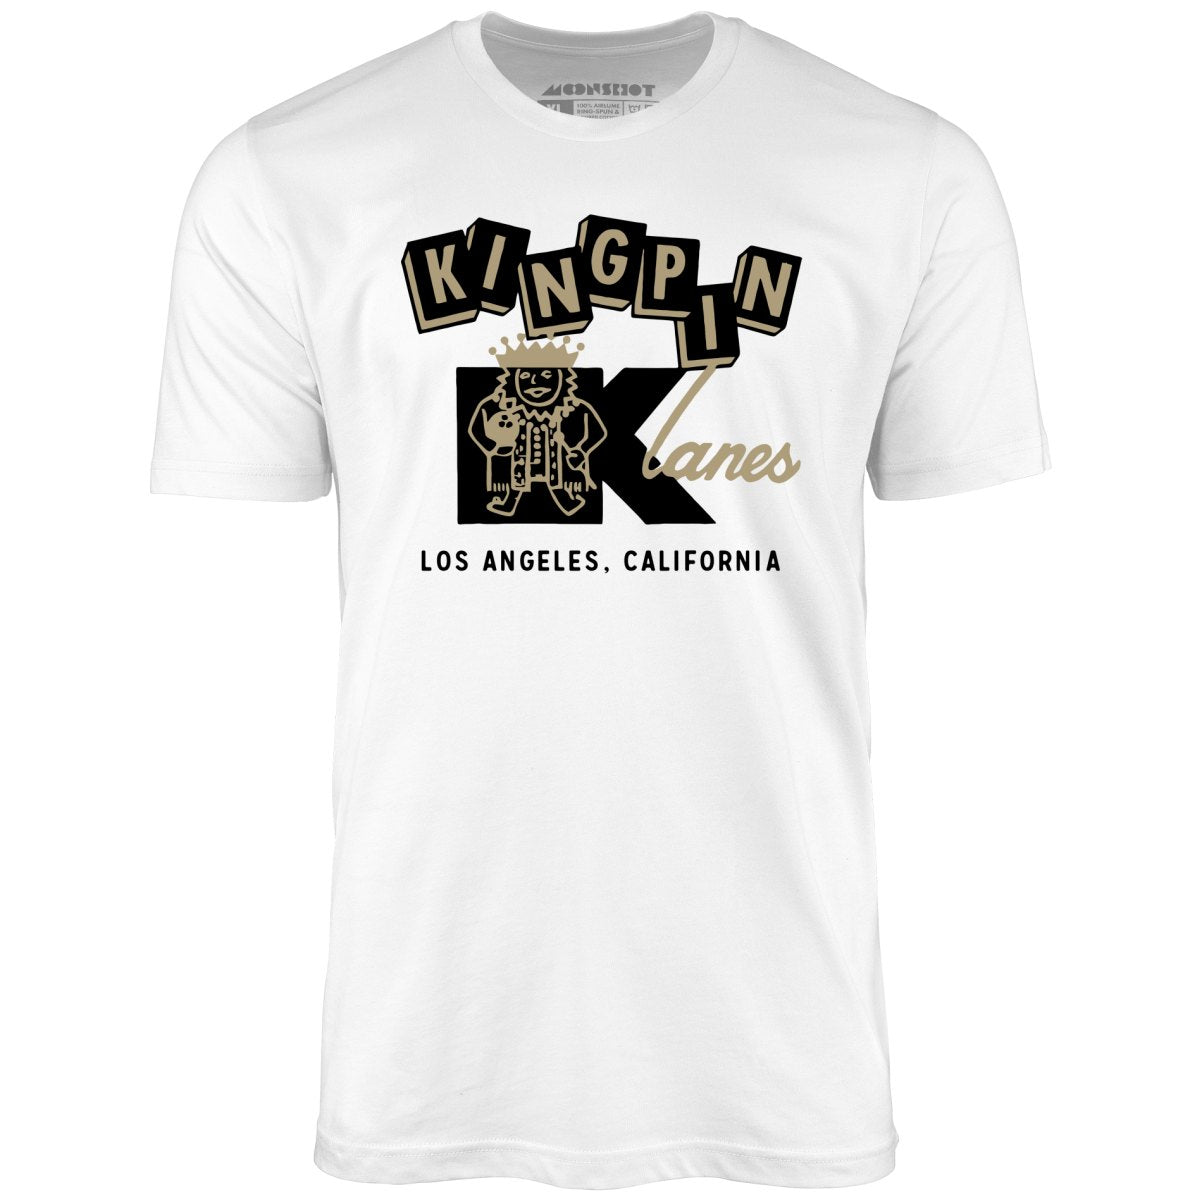 Kingpin Lanes - Los Angeles, CA - Vintage Bowling Alley - Unisex T-Shirt